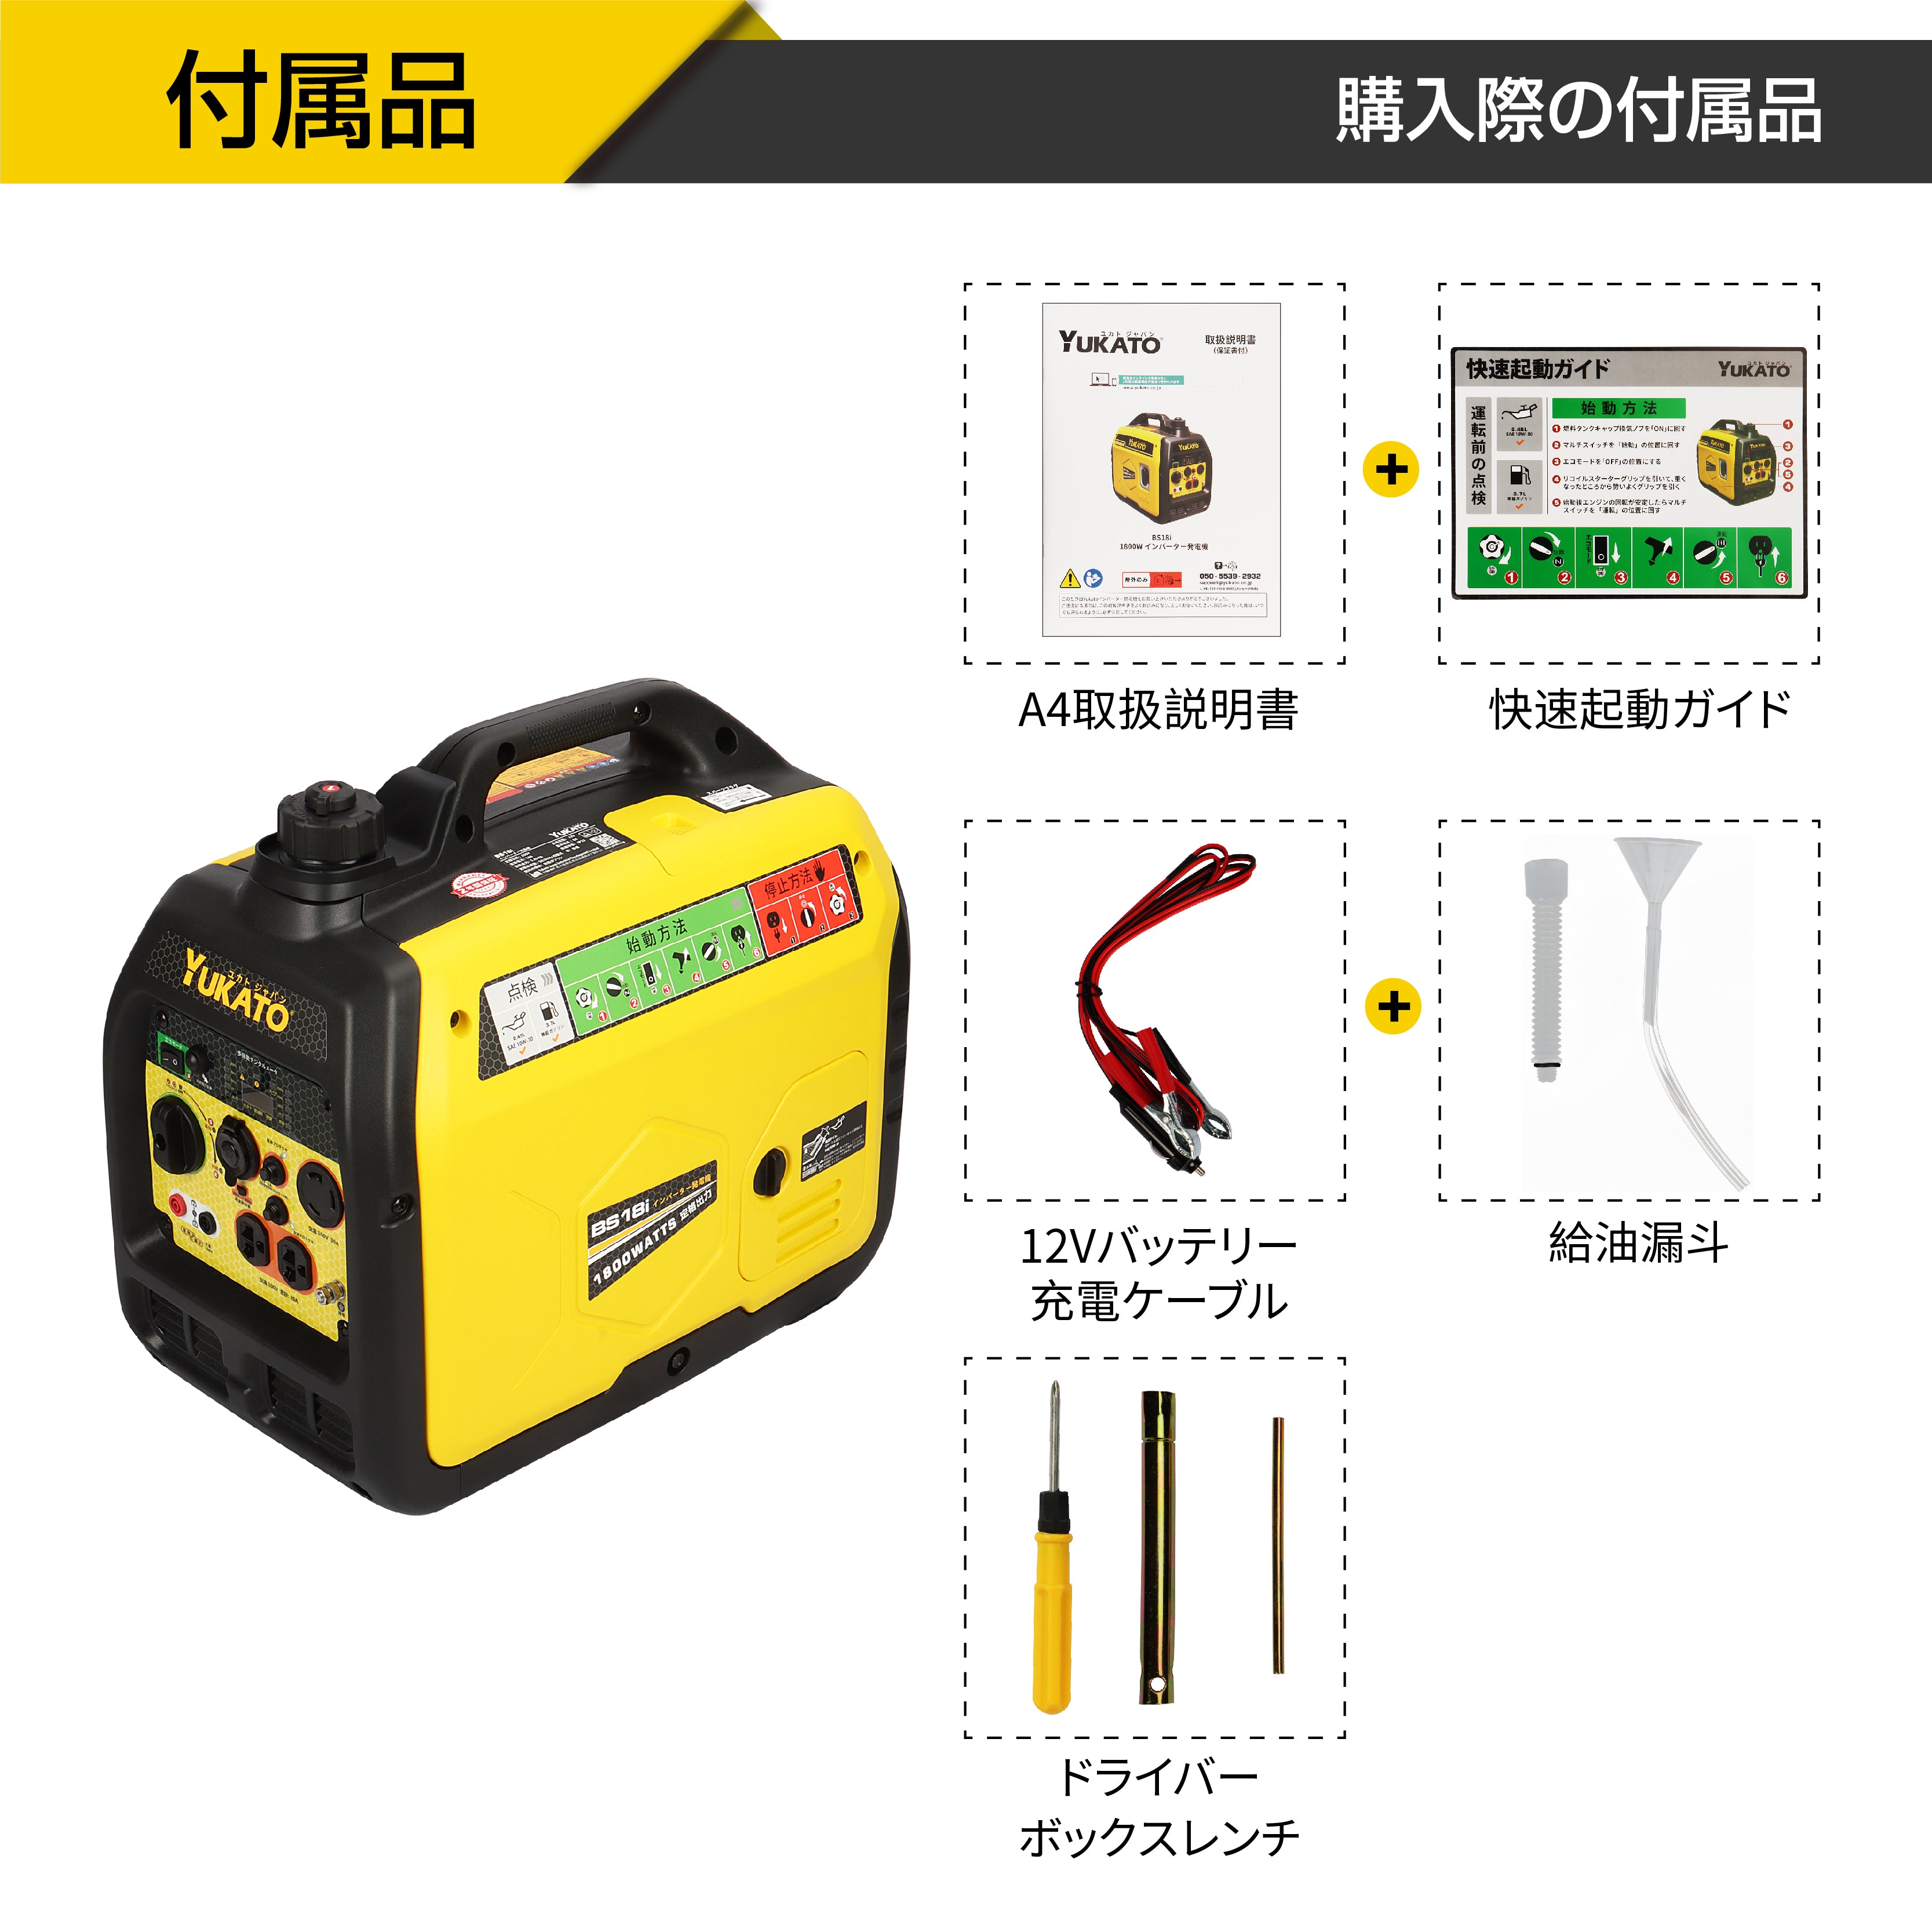 YUKATO BS18i インバーター発電機 1800W – YUKATOジャパン公式サイト